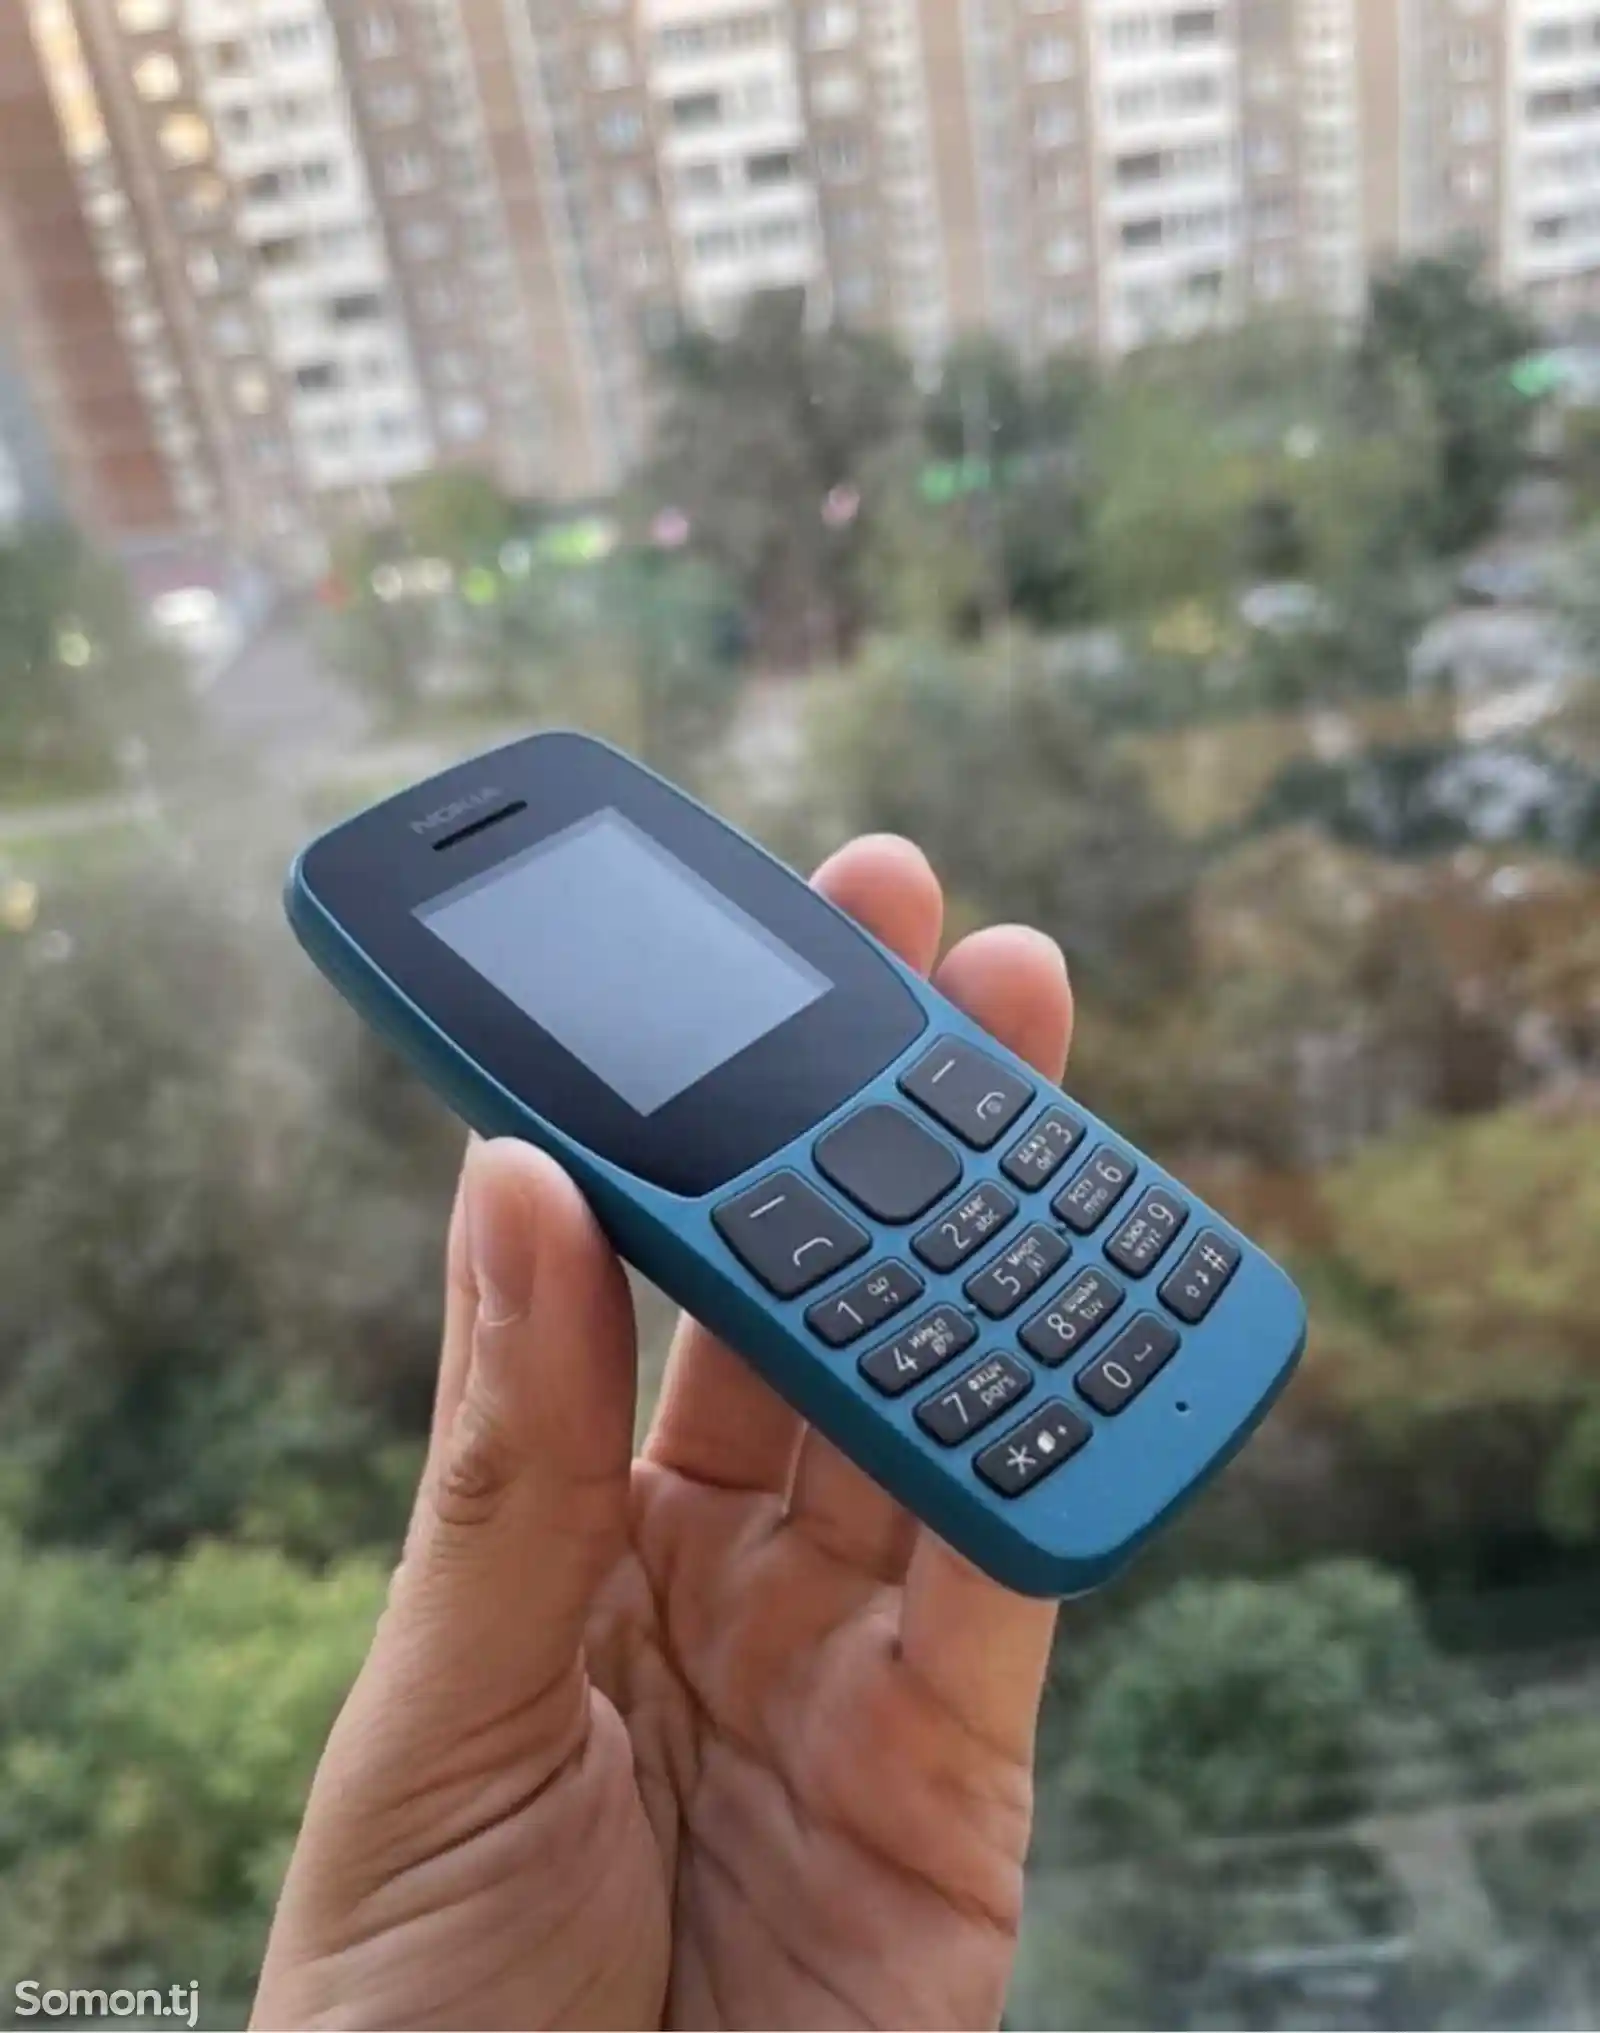 Nokia 110 Dual sim-1